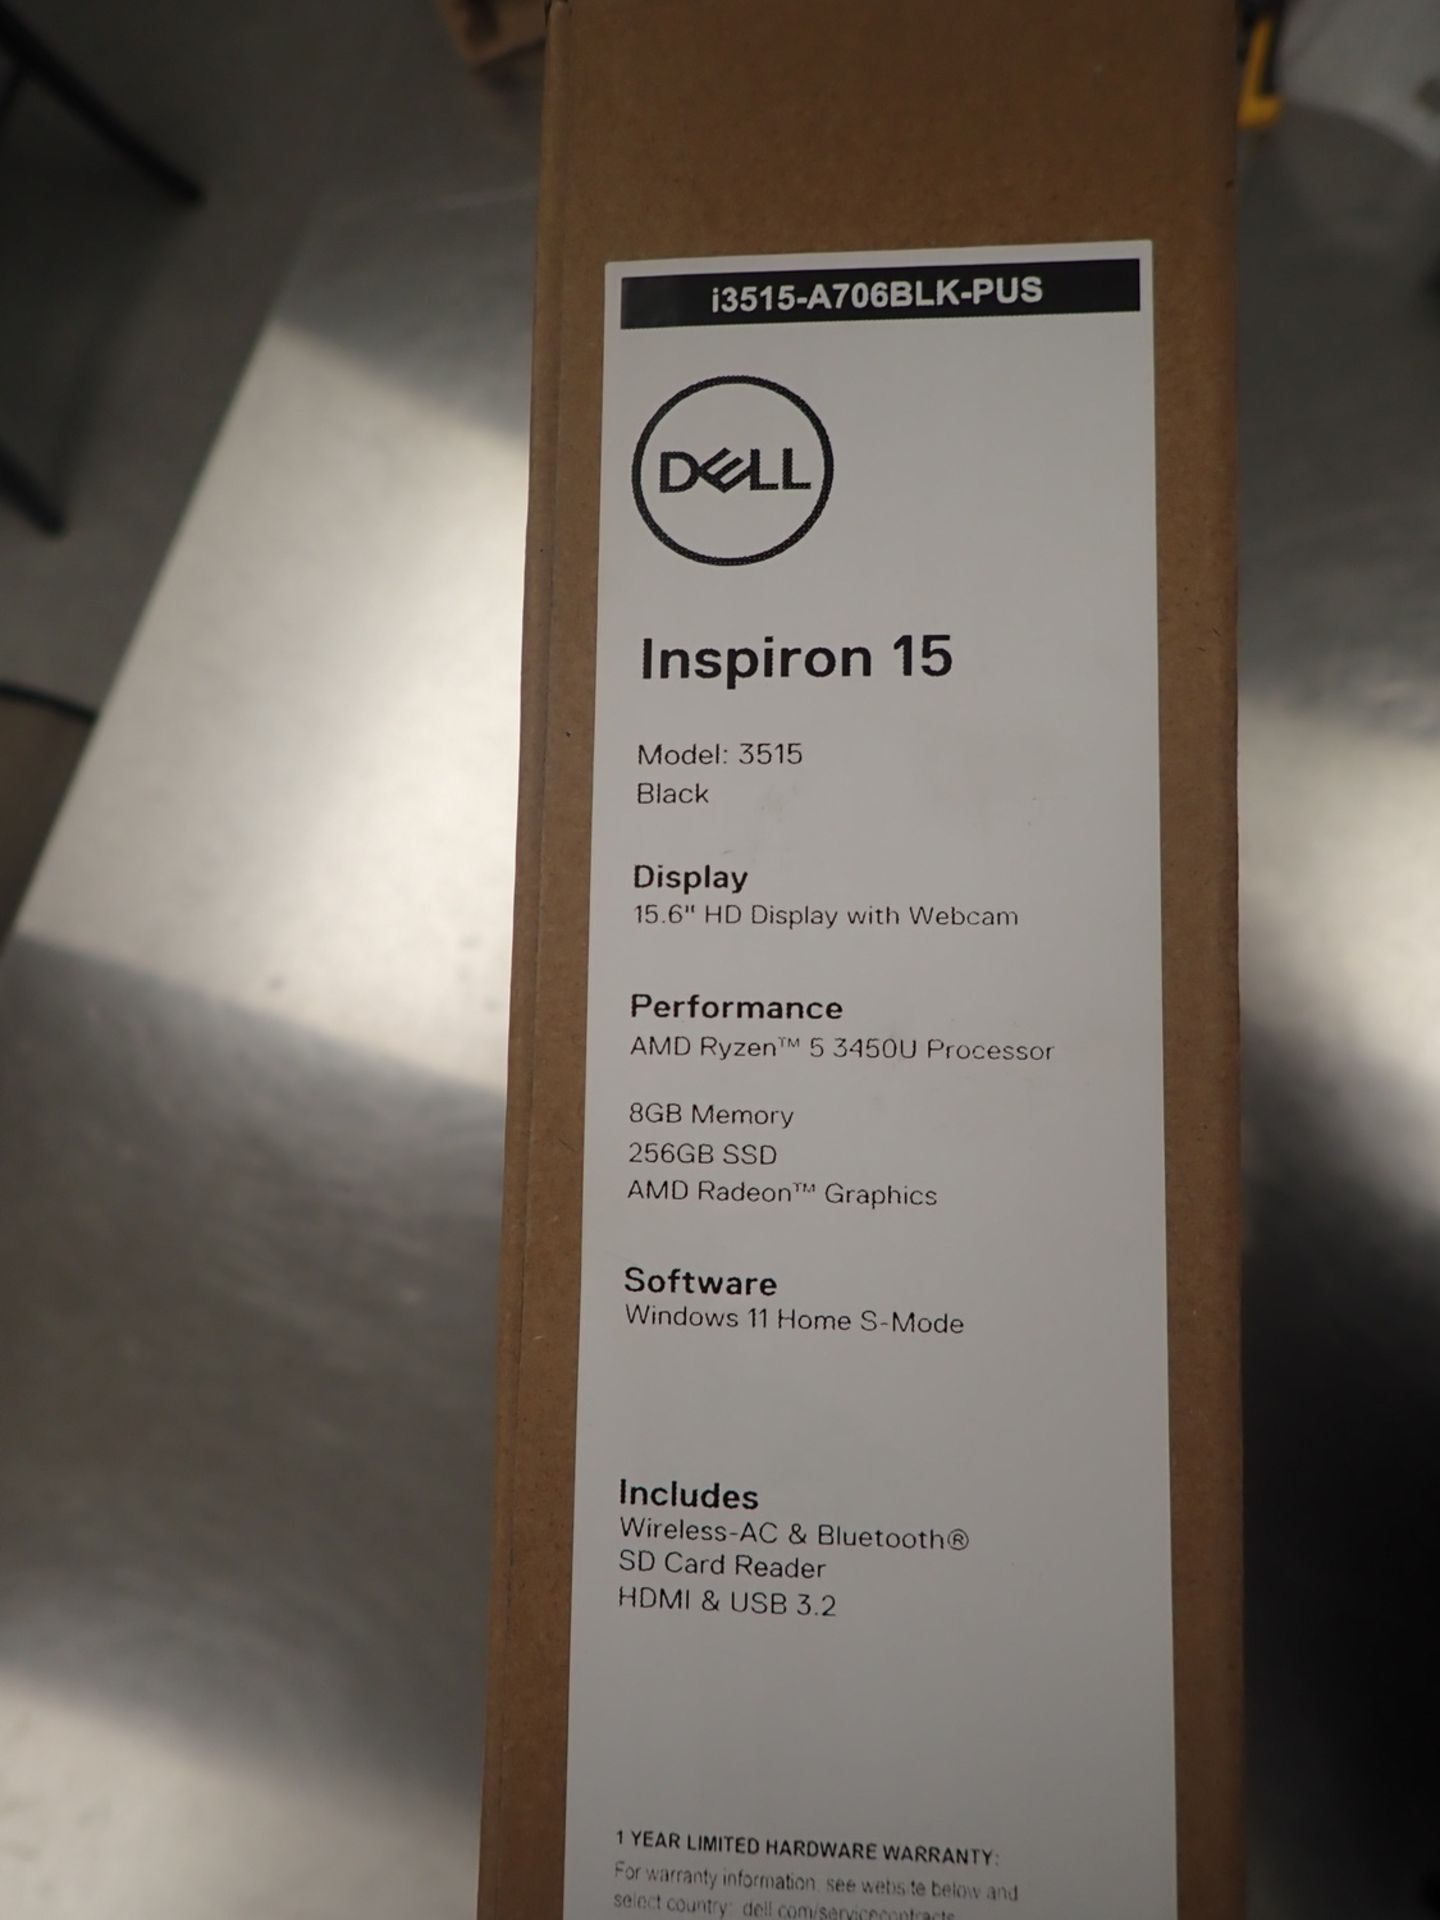 (NEW) DELL INSPIRON 15 (3515) 15.6" LAPTOP W/ AMD RYZEN 5 3450U CPU, 8GB RAM, 256GB SSD,POWER SUPPLY - Image 3 of 3